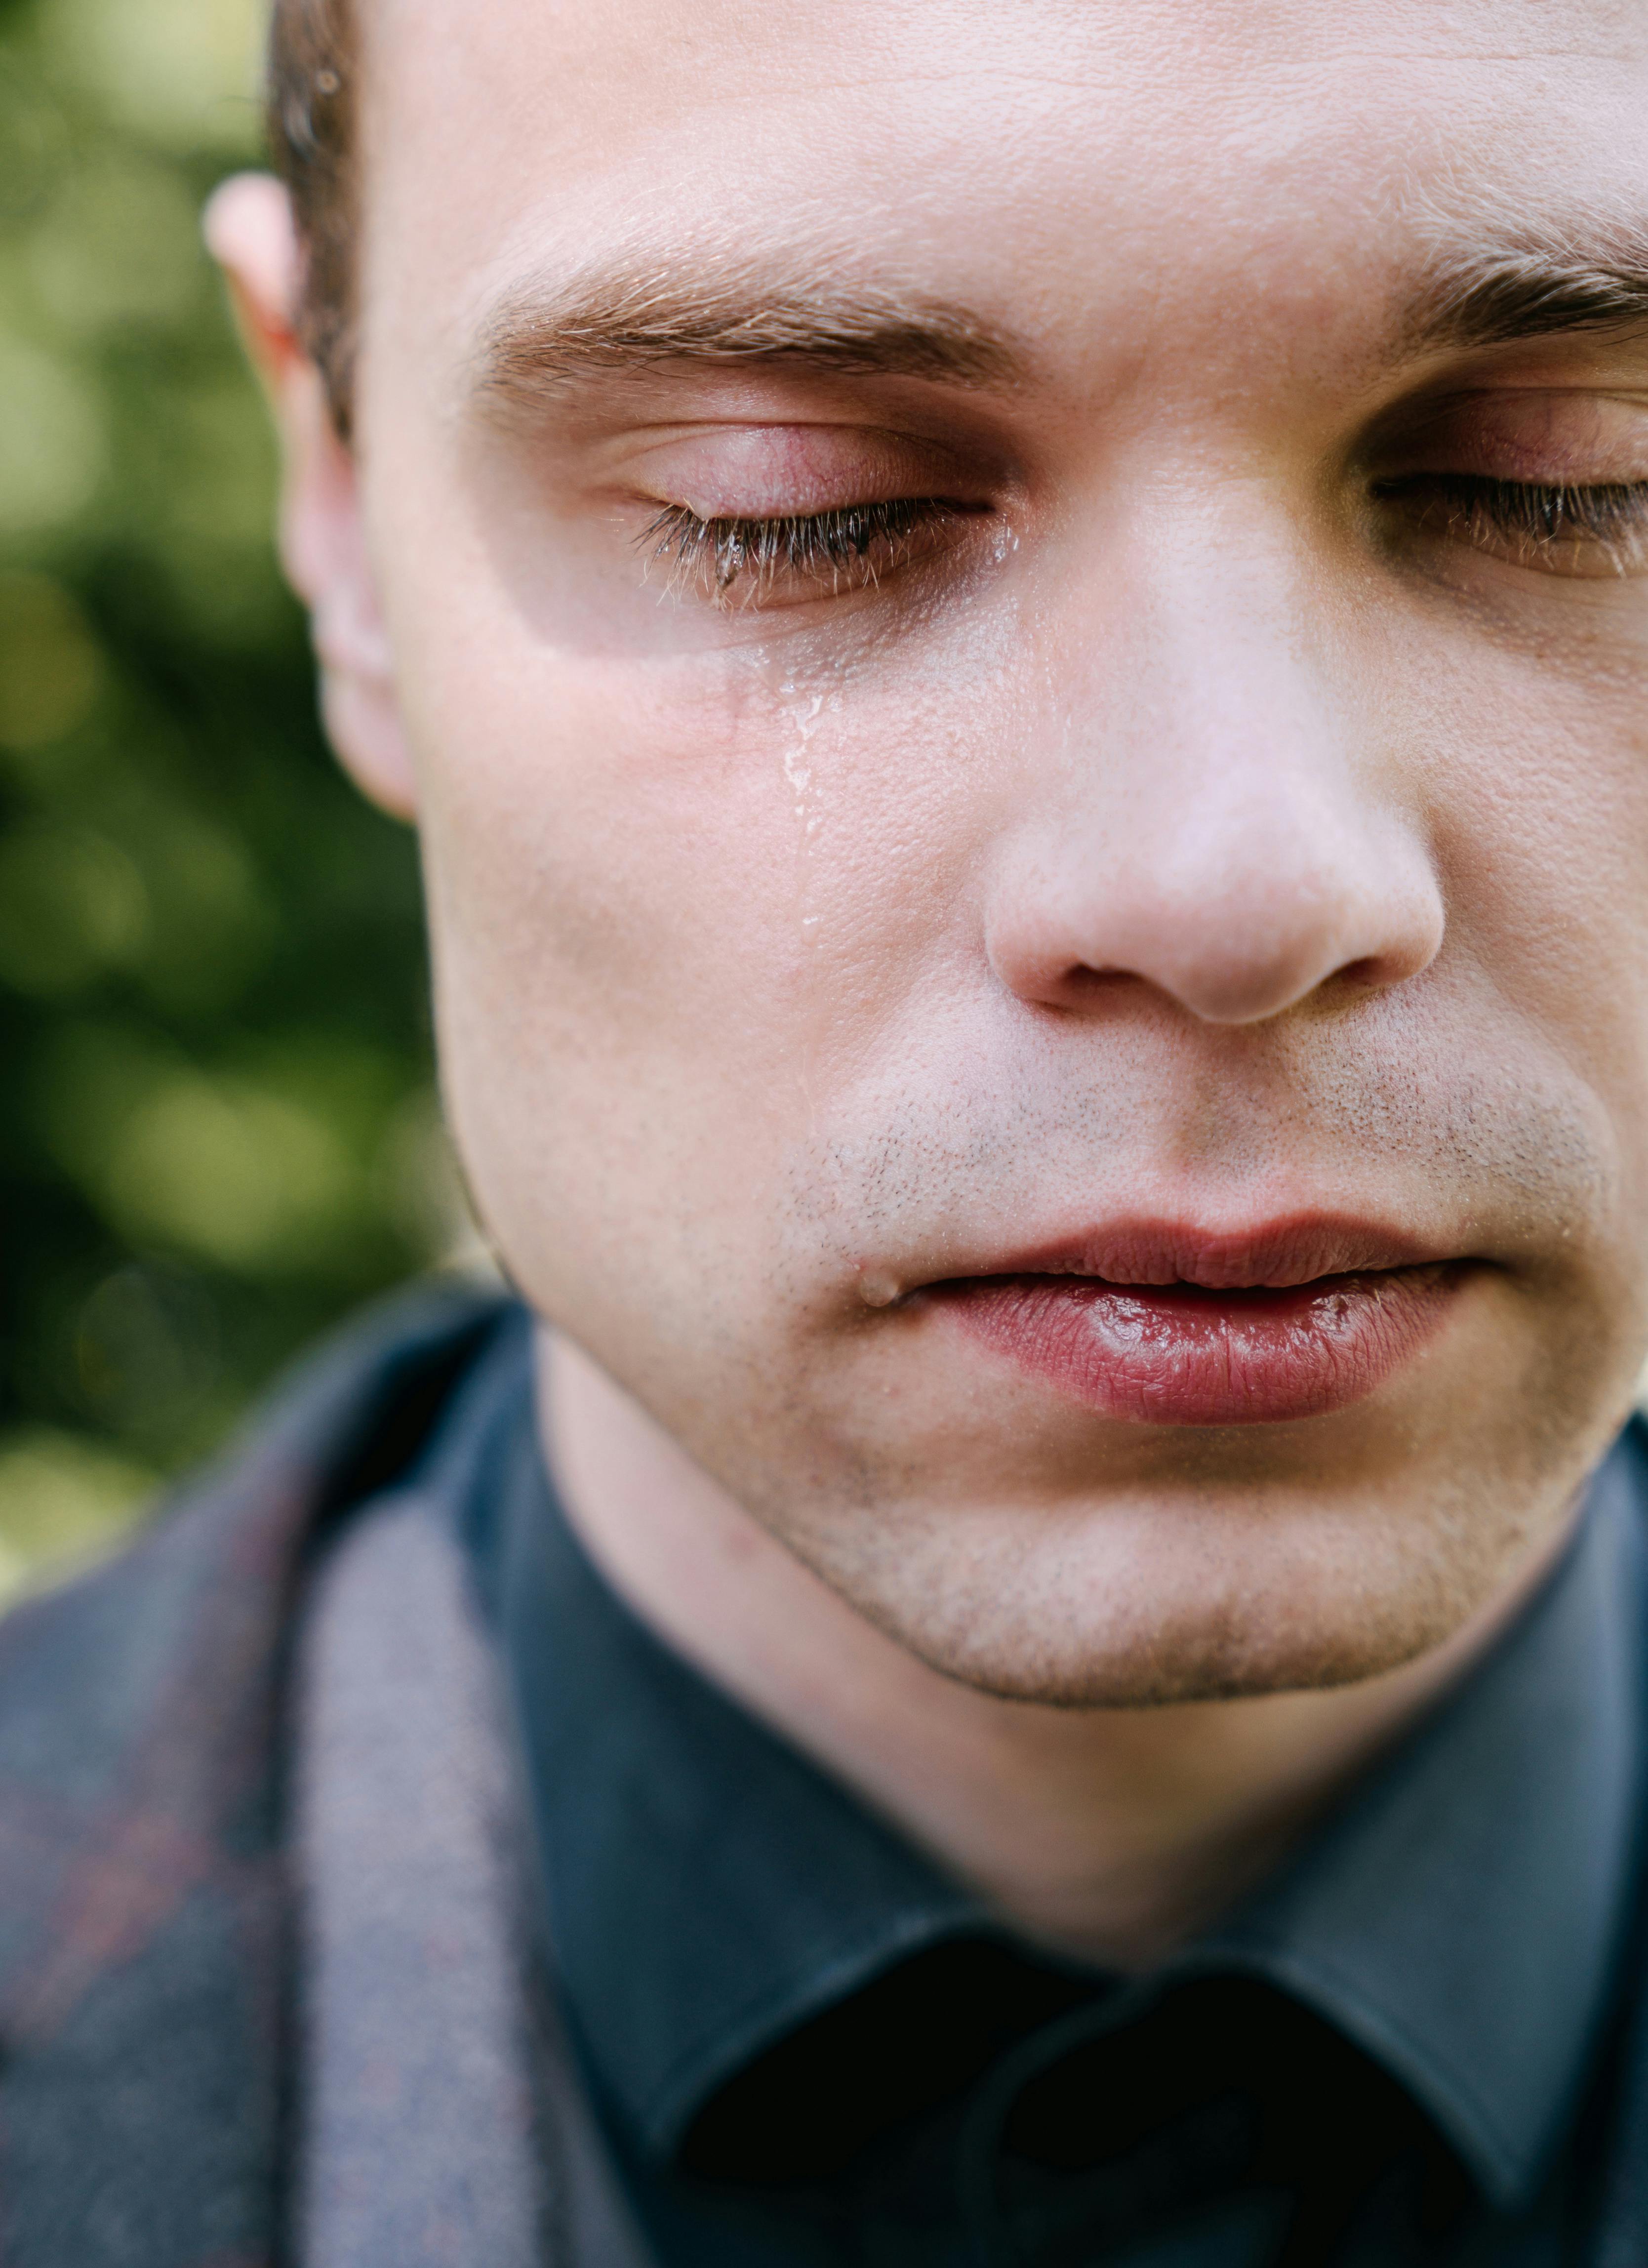 Un hombre llorando | Fuente: Pexels